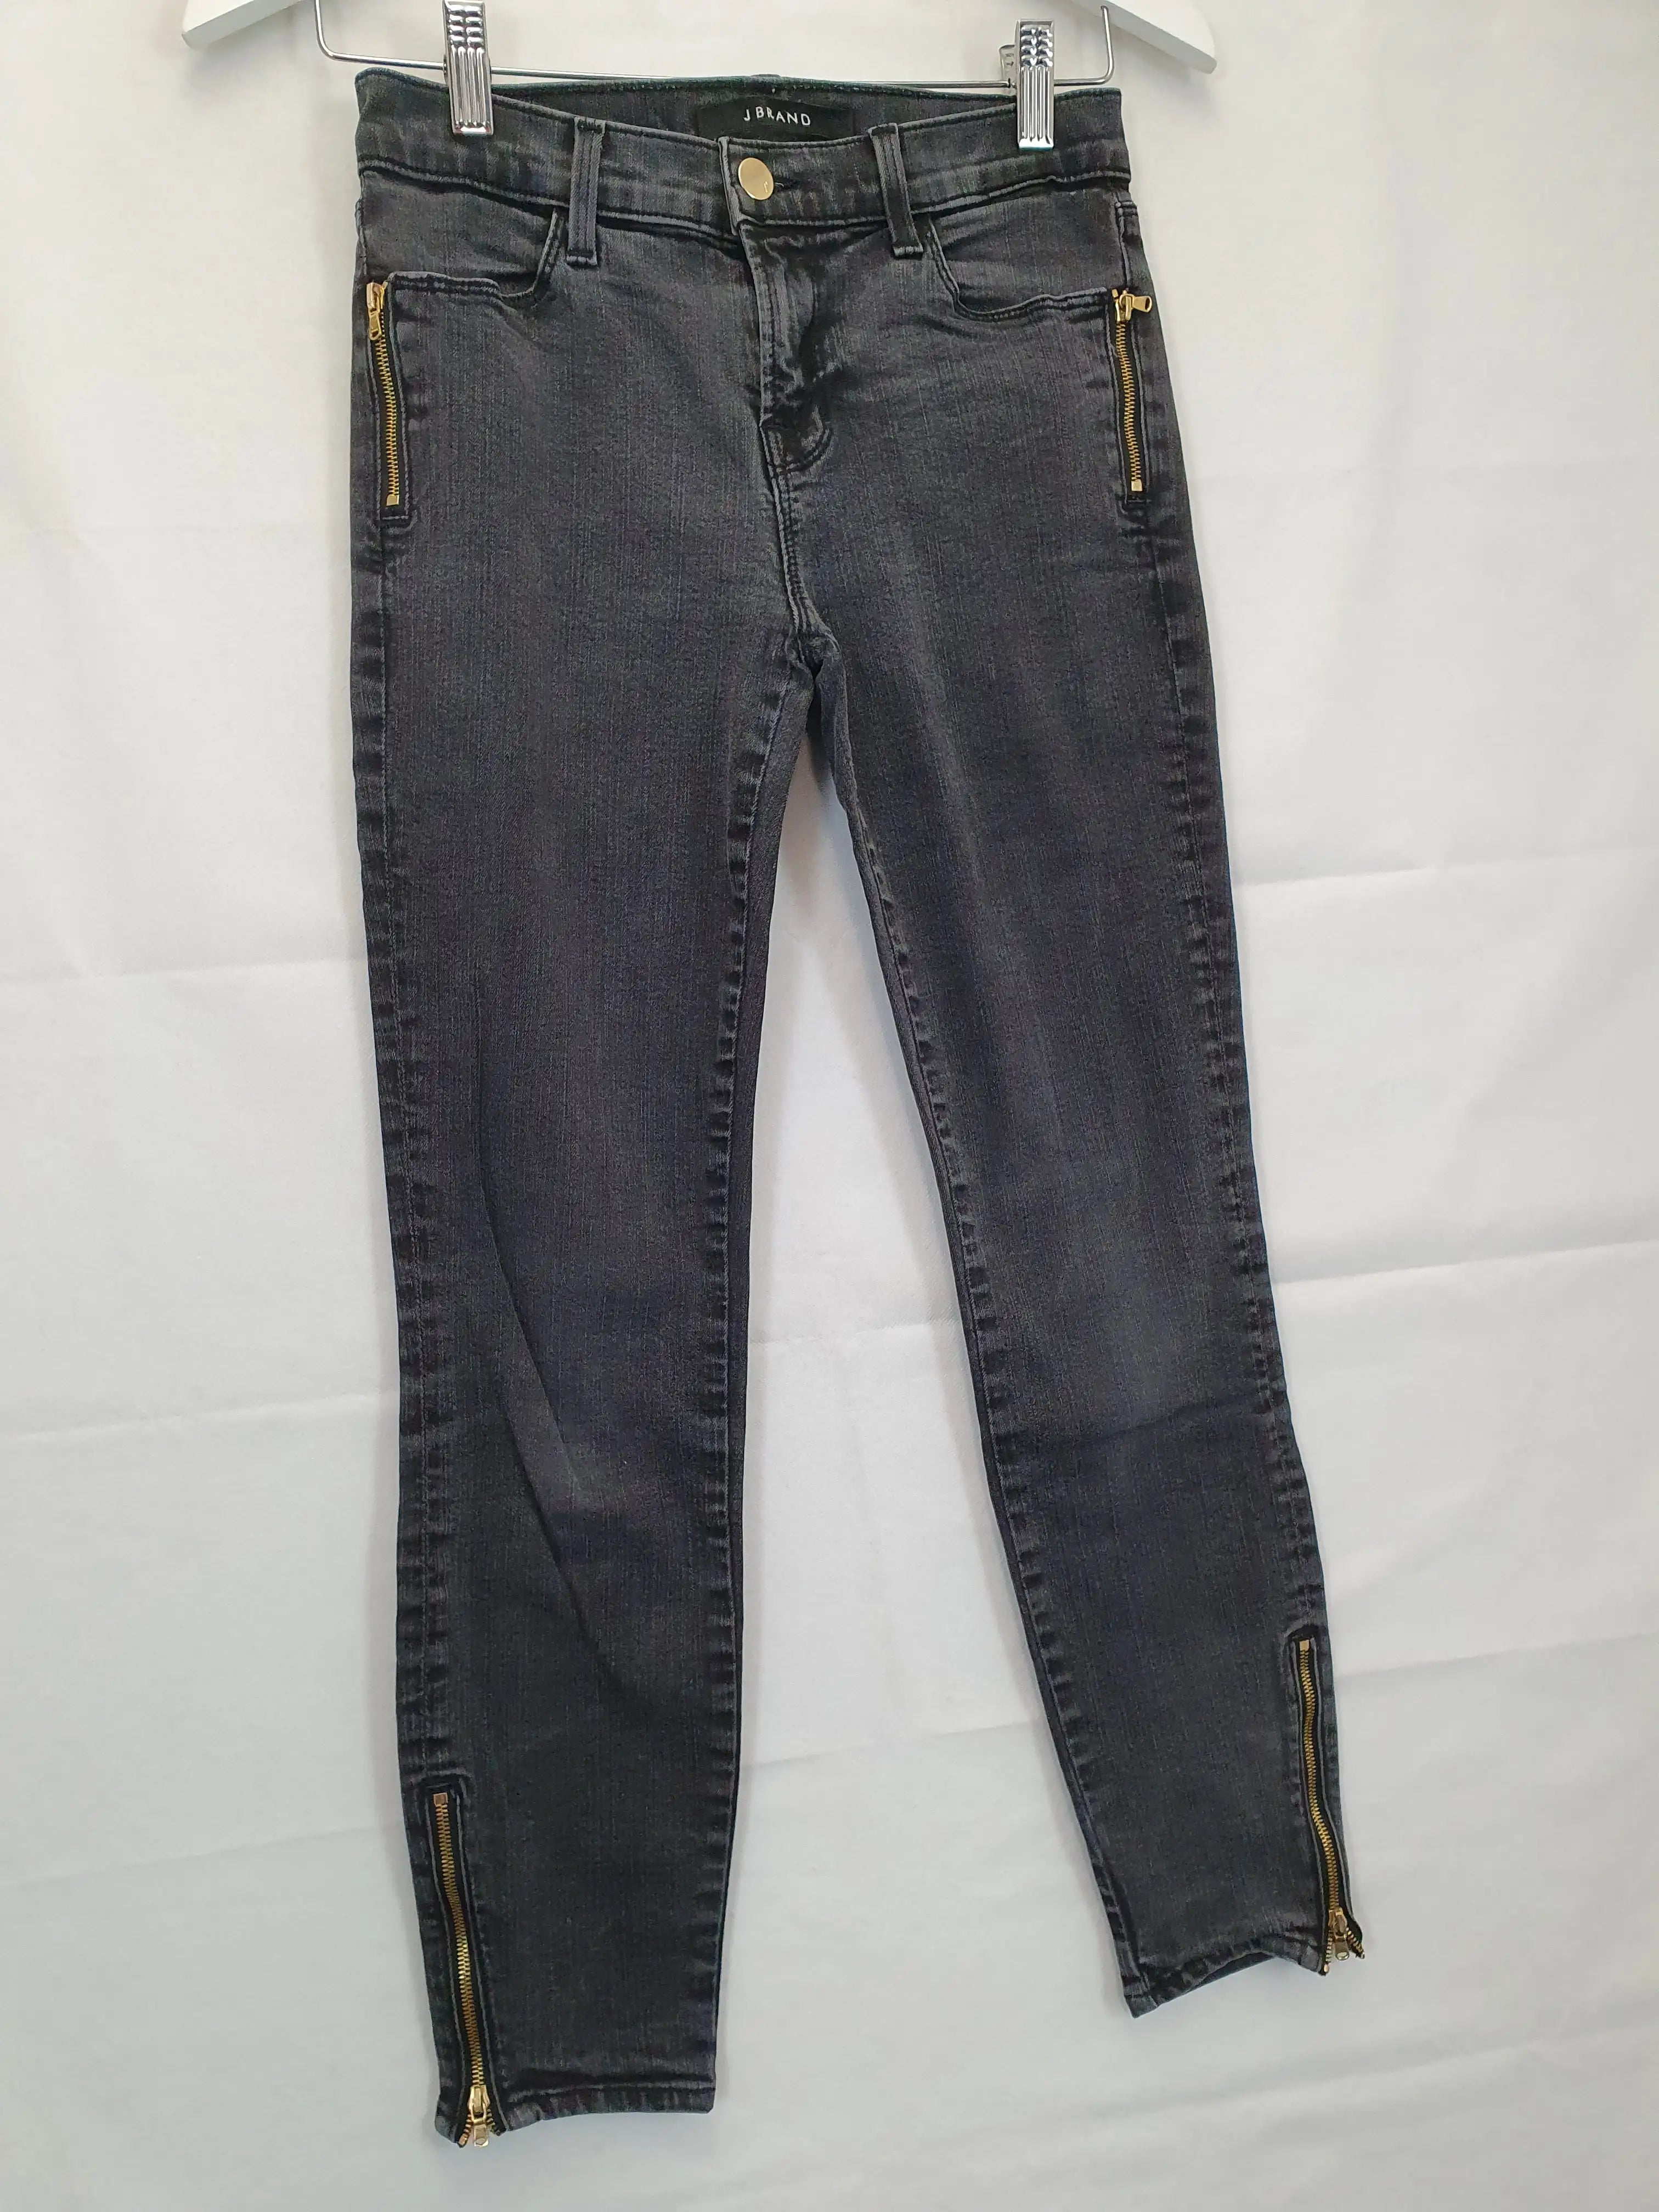 Black Shiny Denim William Rast Skinny Jeans With Ankle Zipper, 25 - Etsy